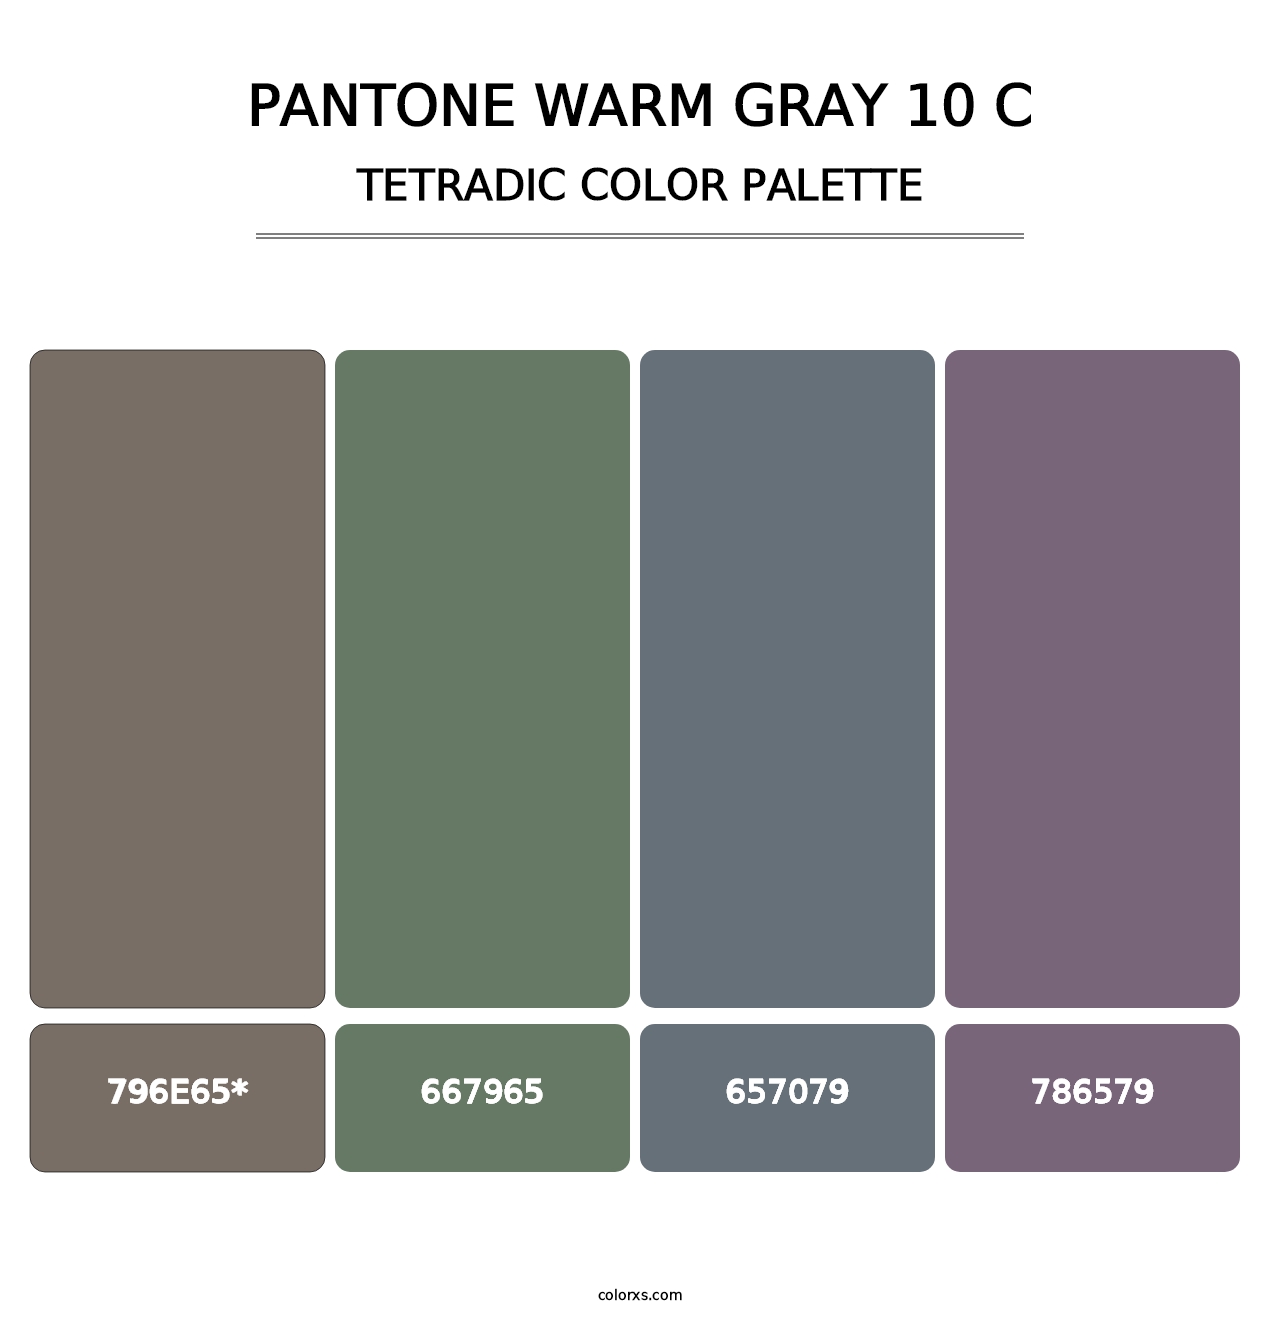 PANTONE Warm Gray 10 C - Tetradic Color Palette